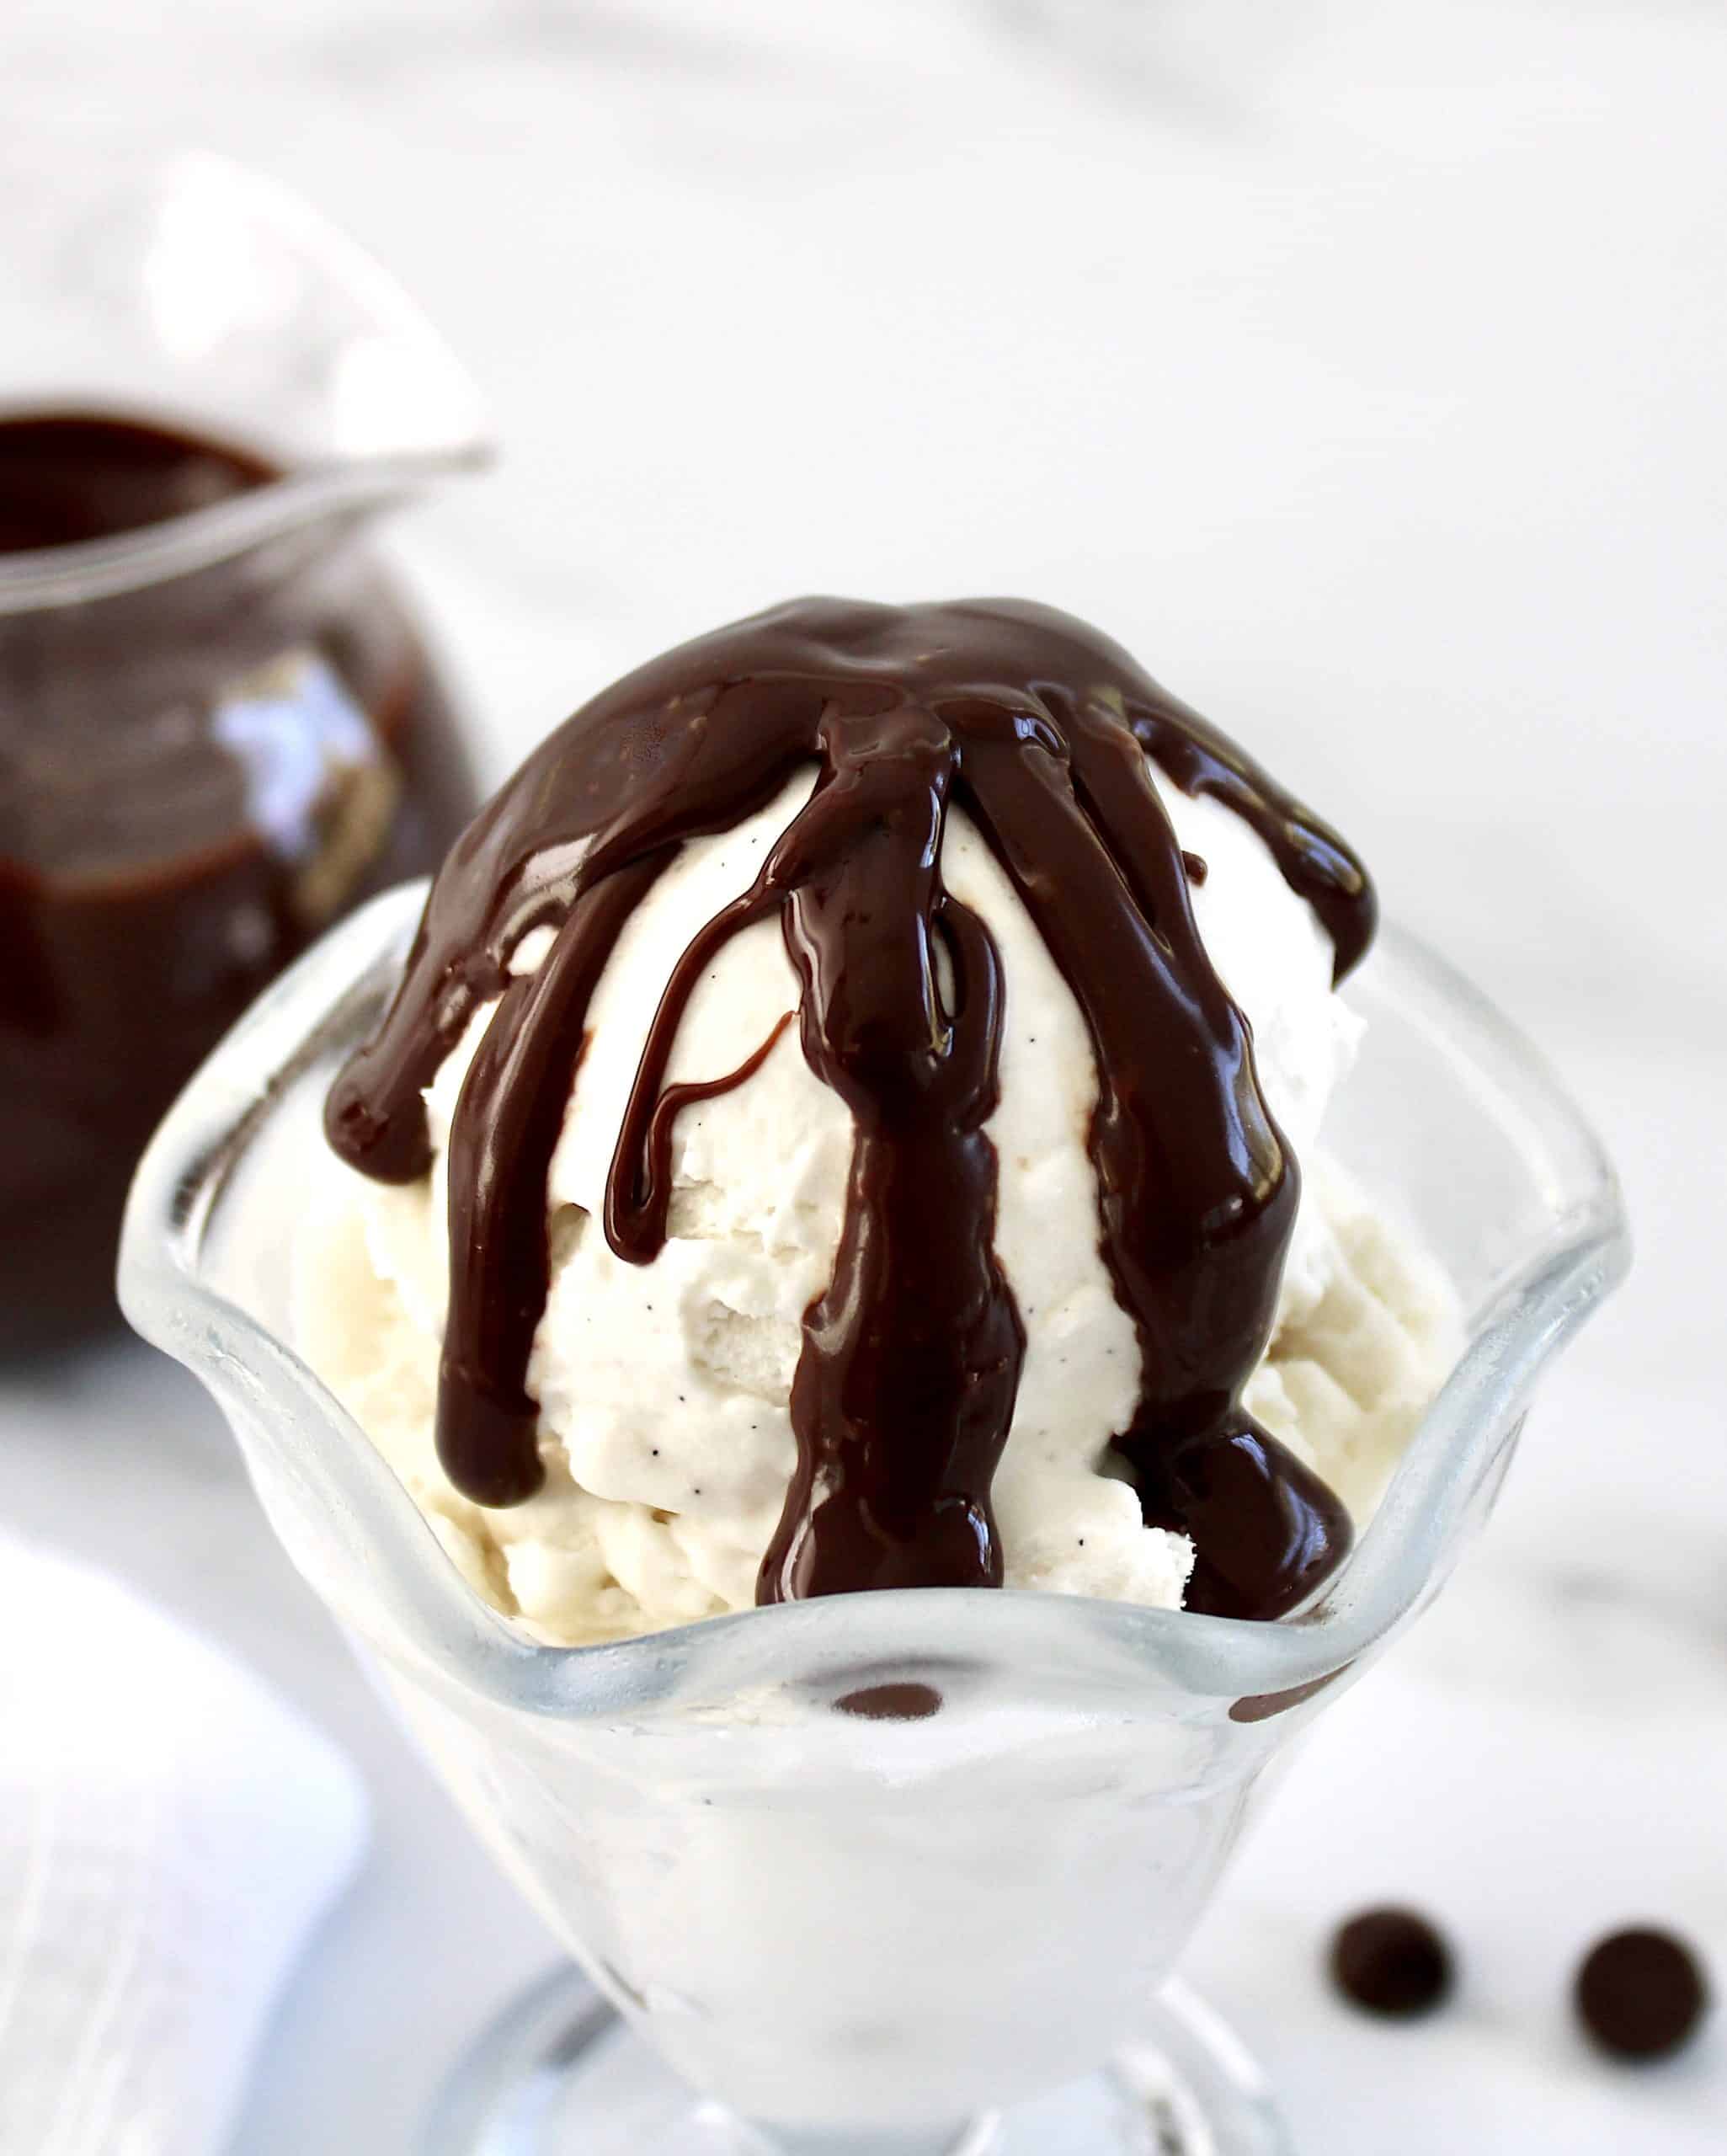 chocolate sauce dripped over vanilla ice cream